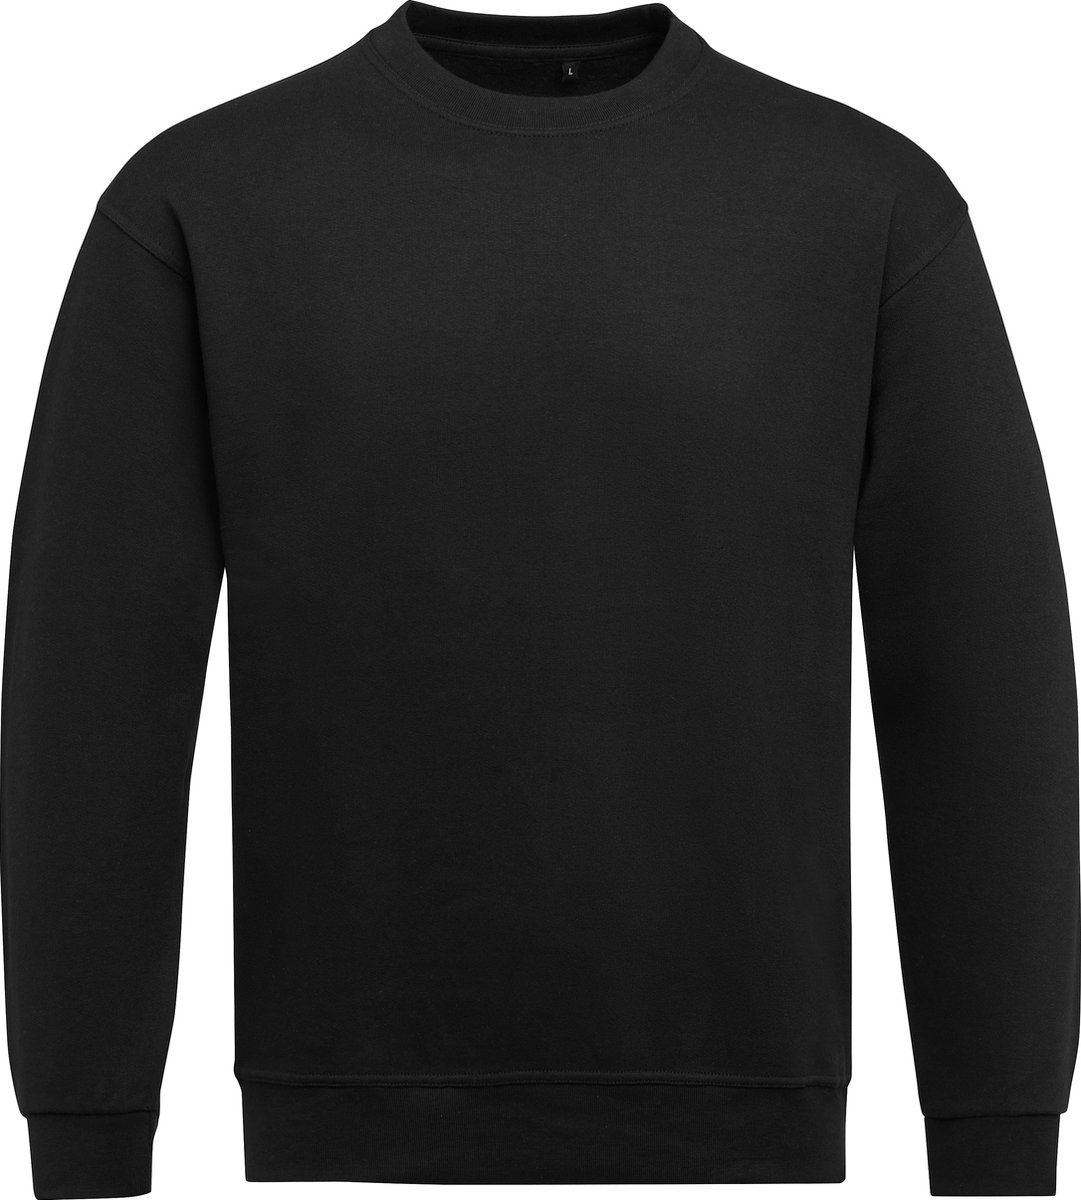 Zwarte unisex sweater merk SG Essential maat M